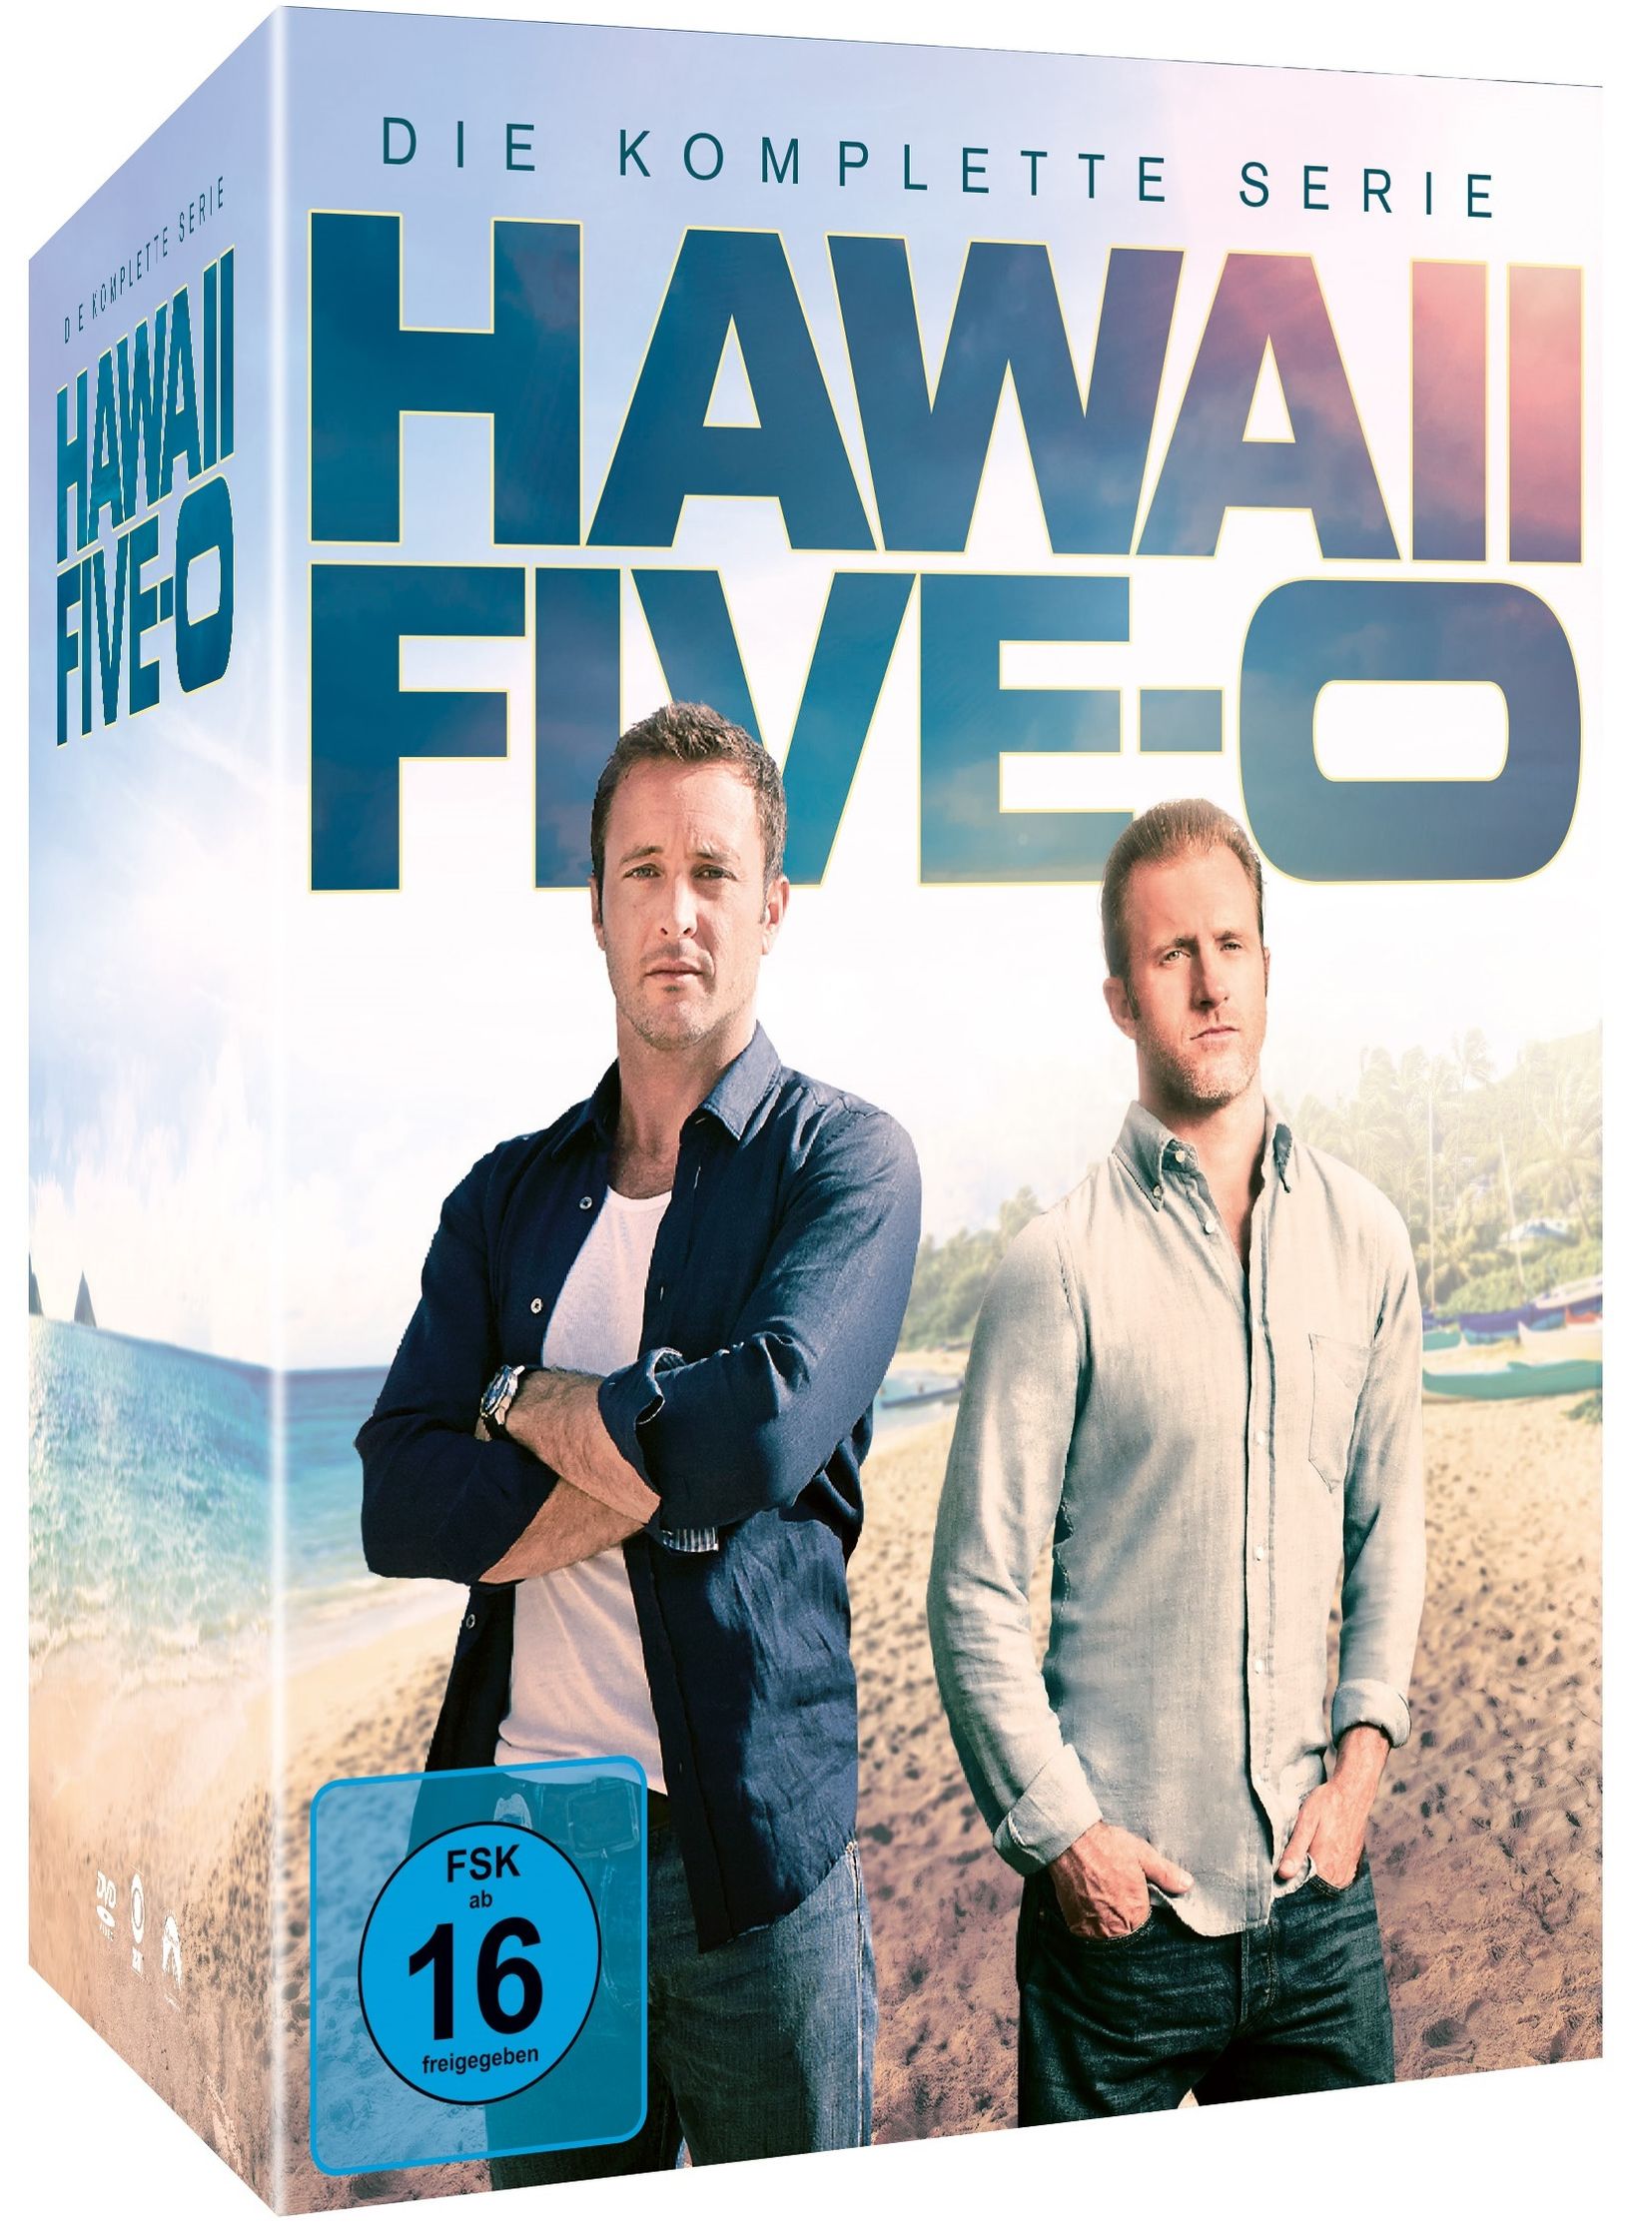 Hawaii Five-0 - Die komplette Serie DVD bei Weltbild.de bestellen